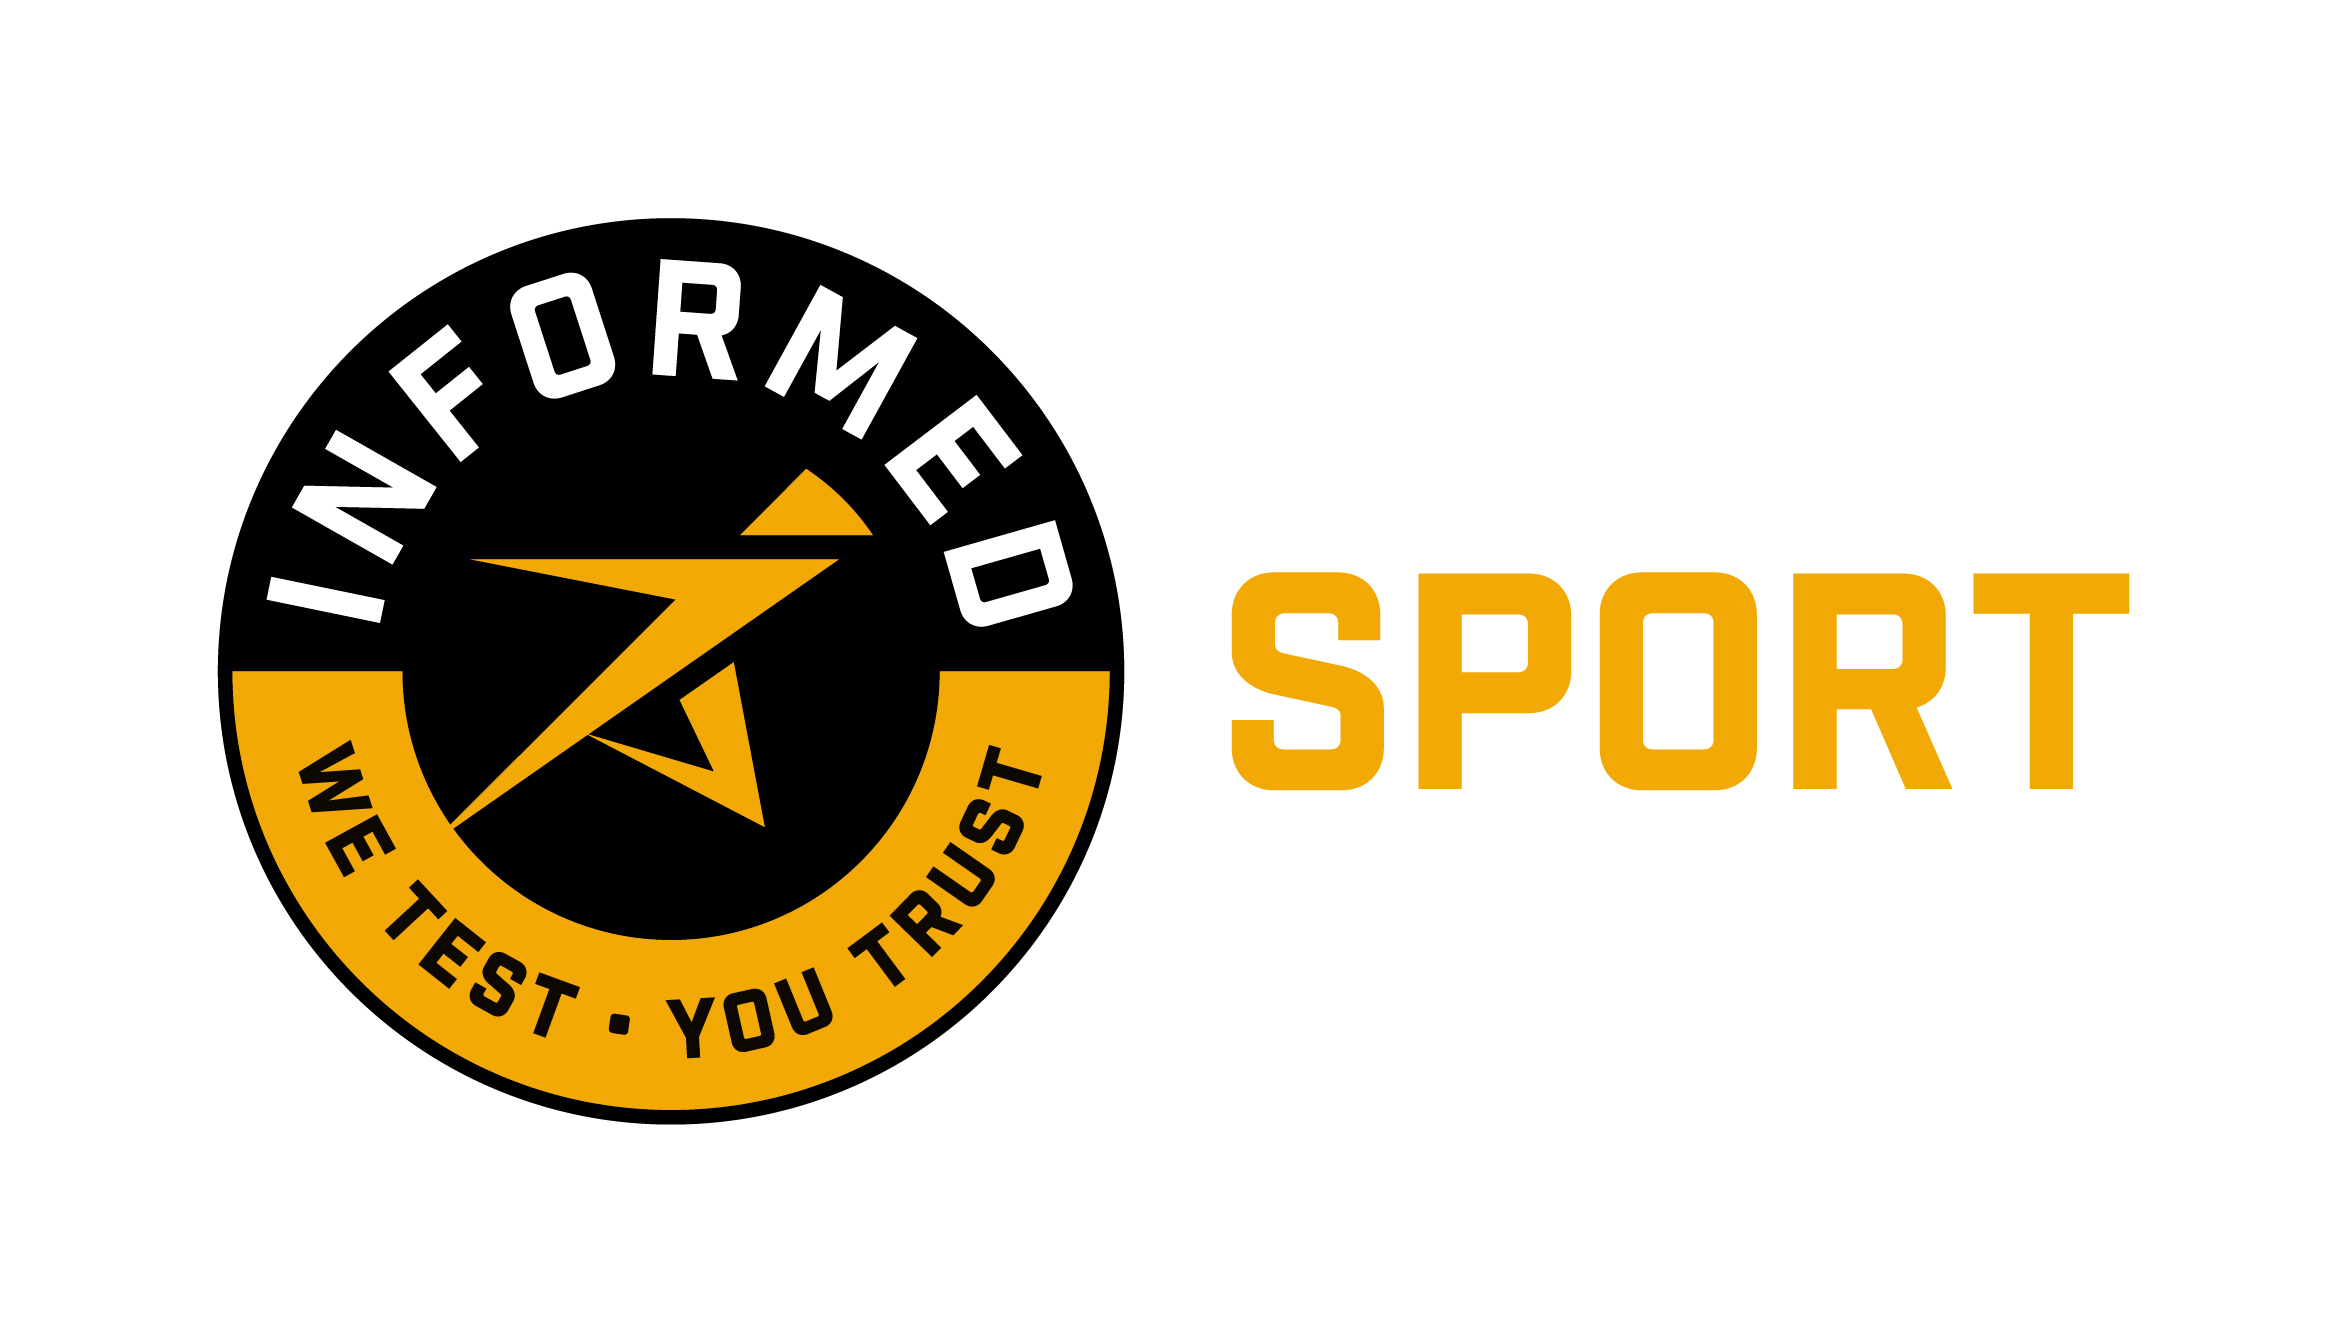 Informed Sport Certified